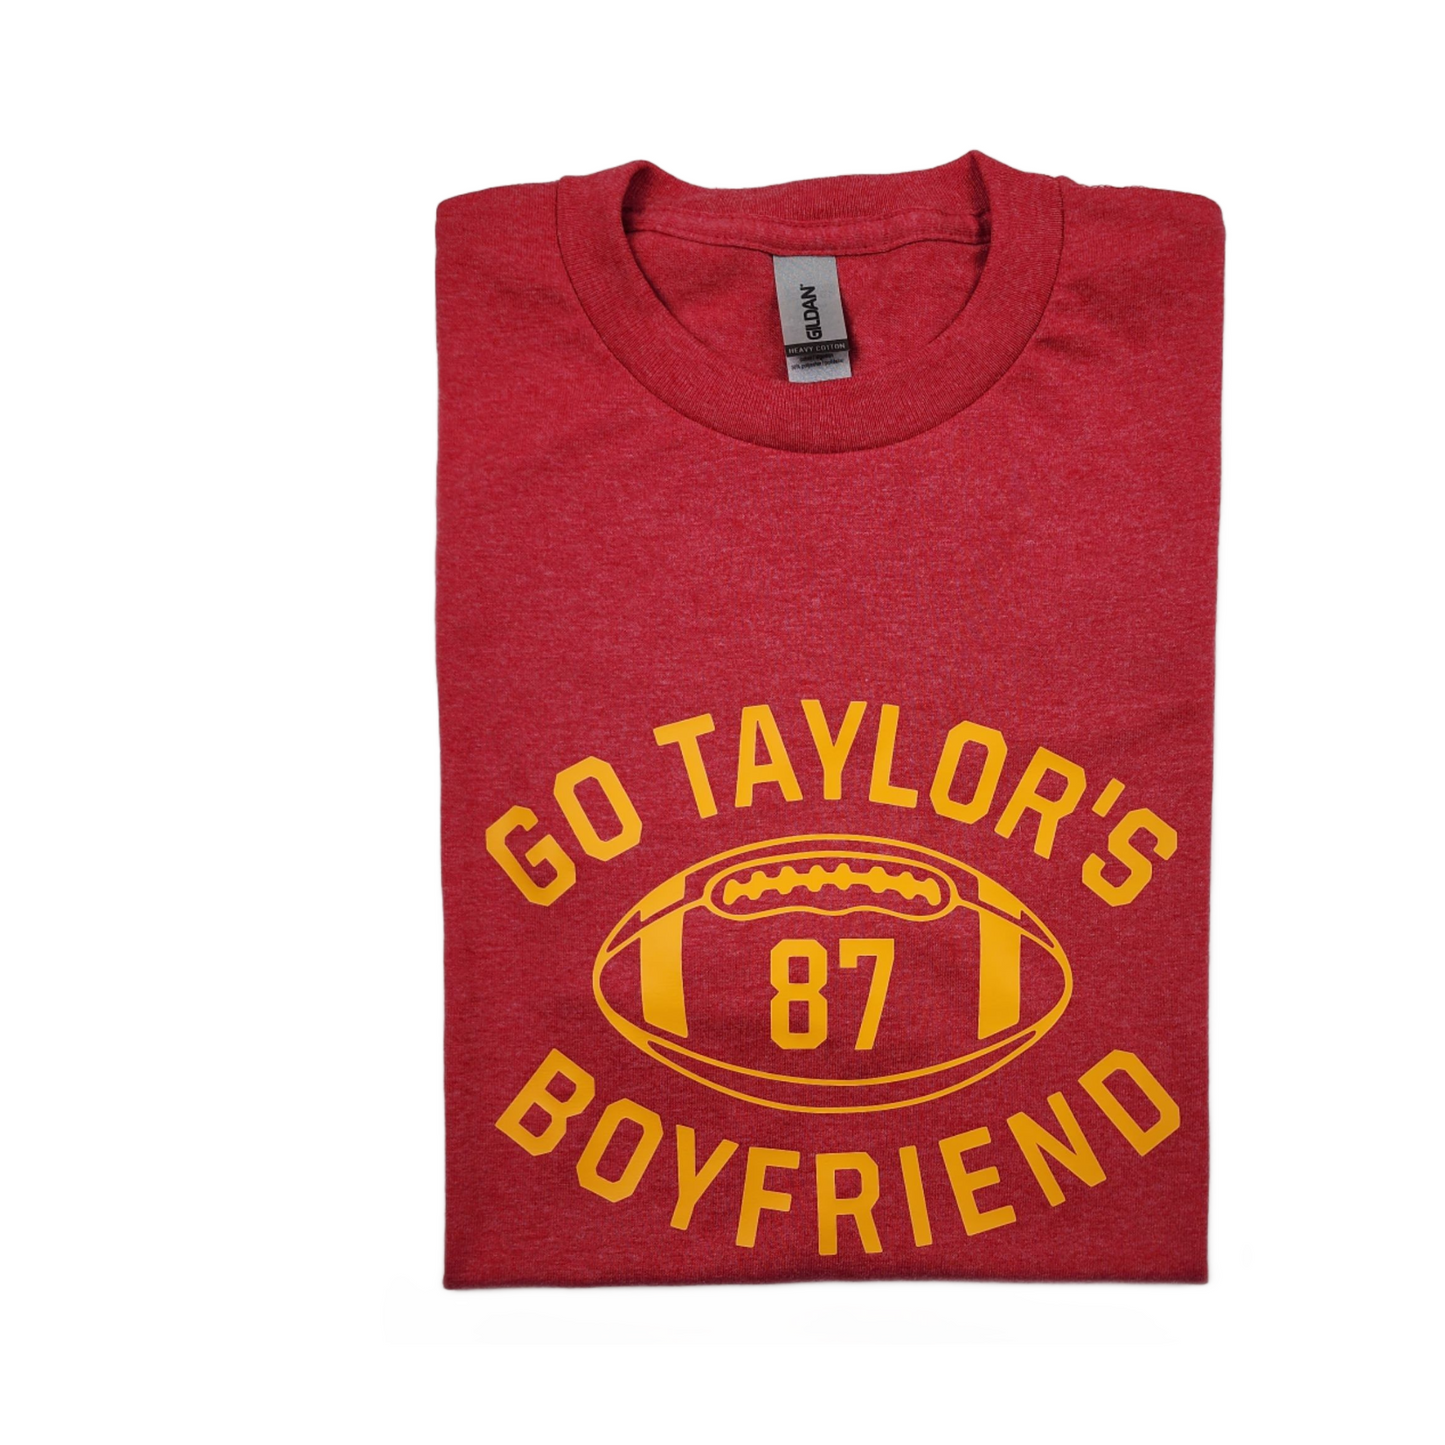 Unisex Short Sleeve Crew Neck Tee Shirt - Go Taylor's Boyfriend